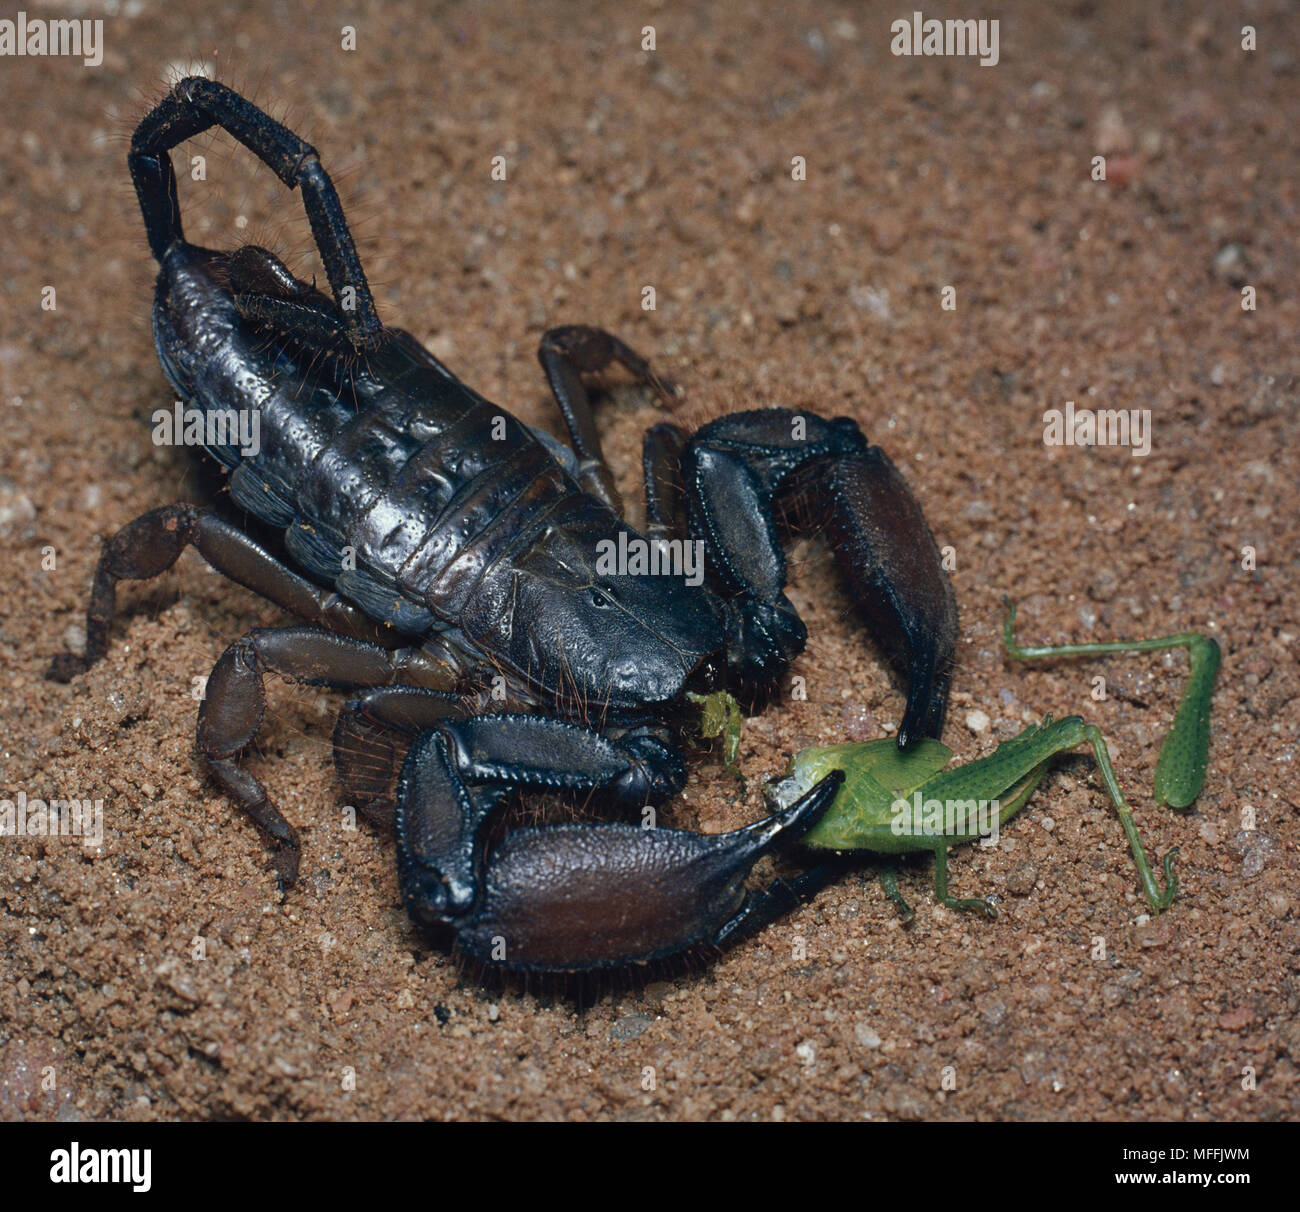 BLACK SCORPION Hadogenes troglodytes eating grasshopper prey Stock Photo